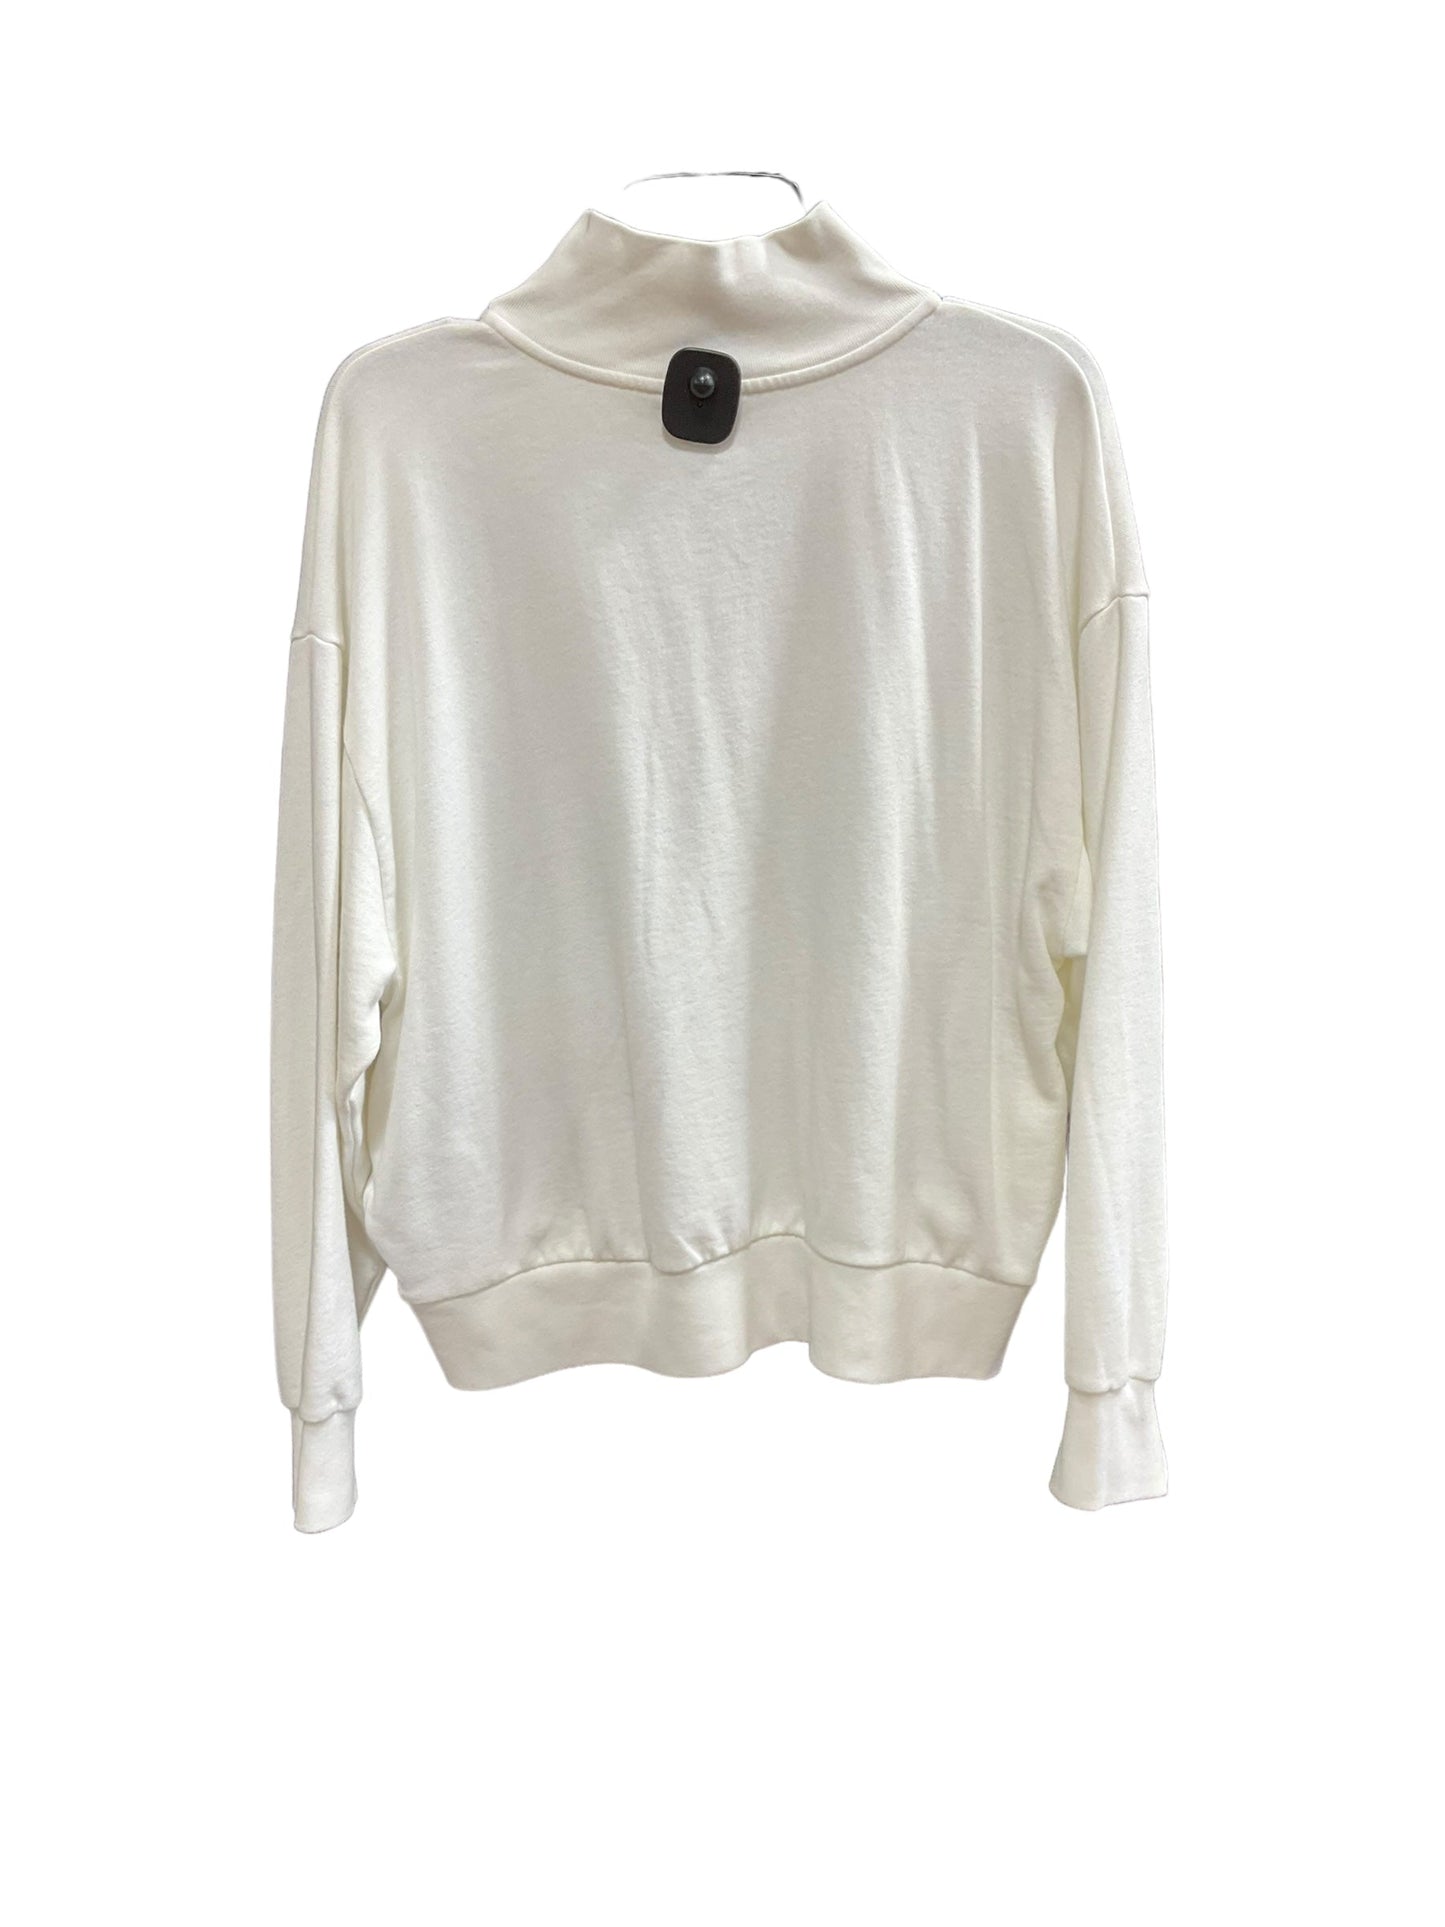 Cream Athletic Sweatshirt Collar Gap, Size L